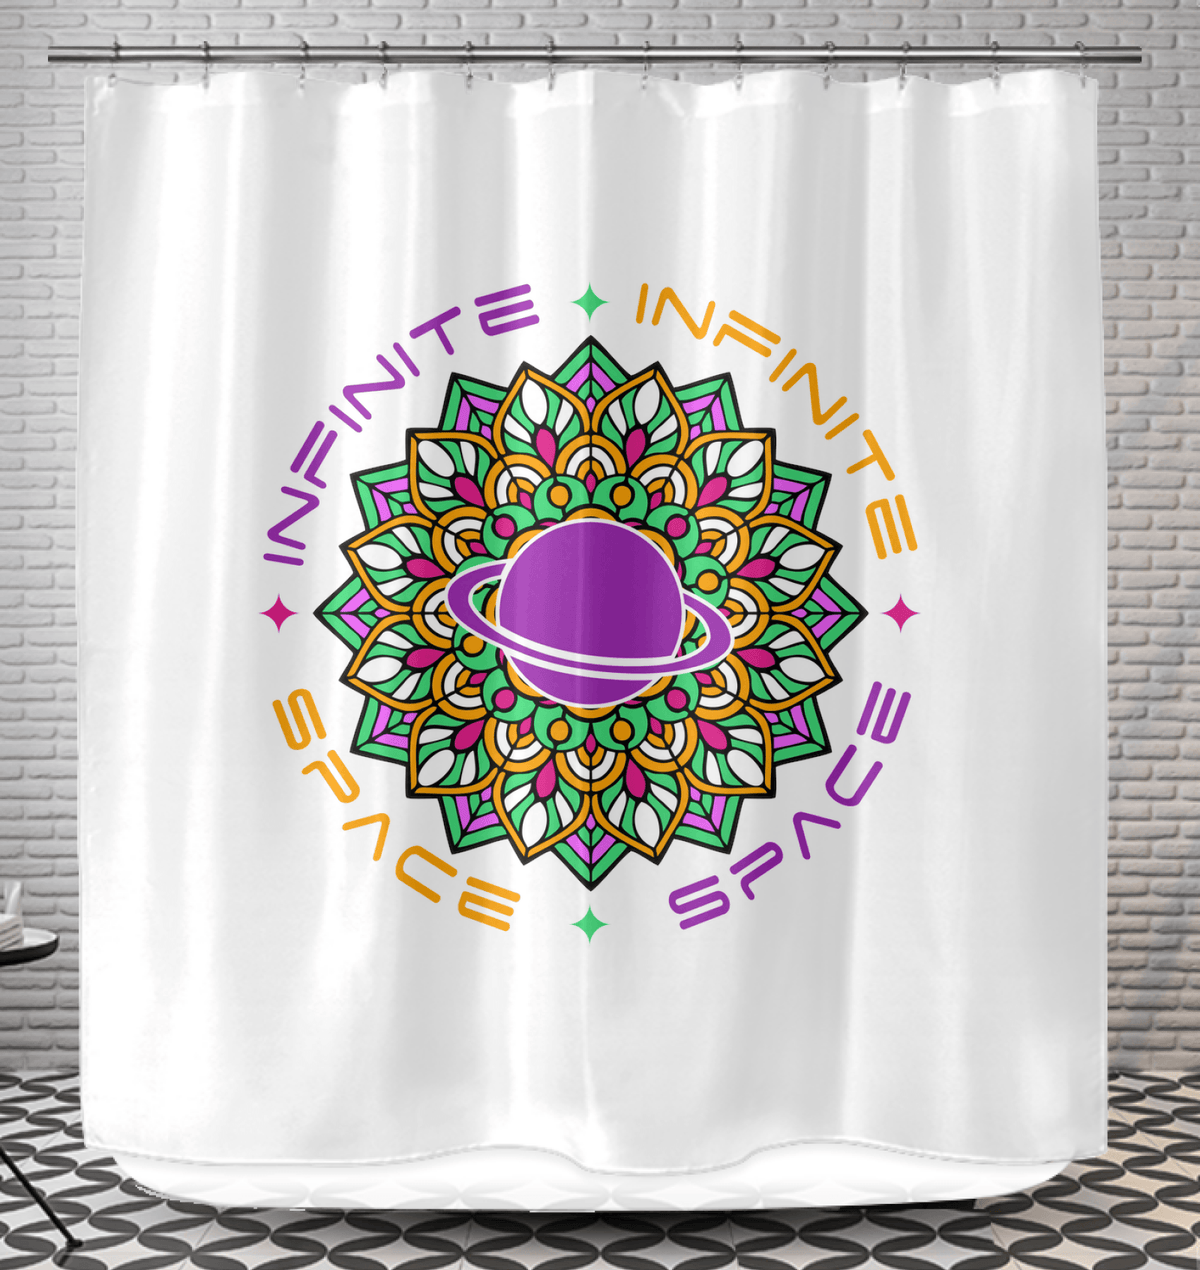 Mandala Of Serenity Shower Curtain - Beyond T-shirts